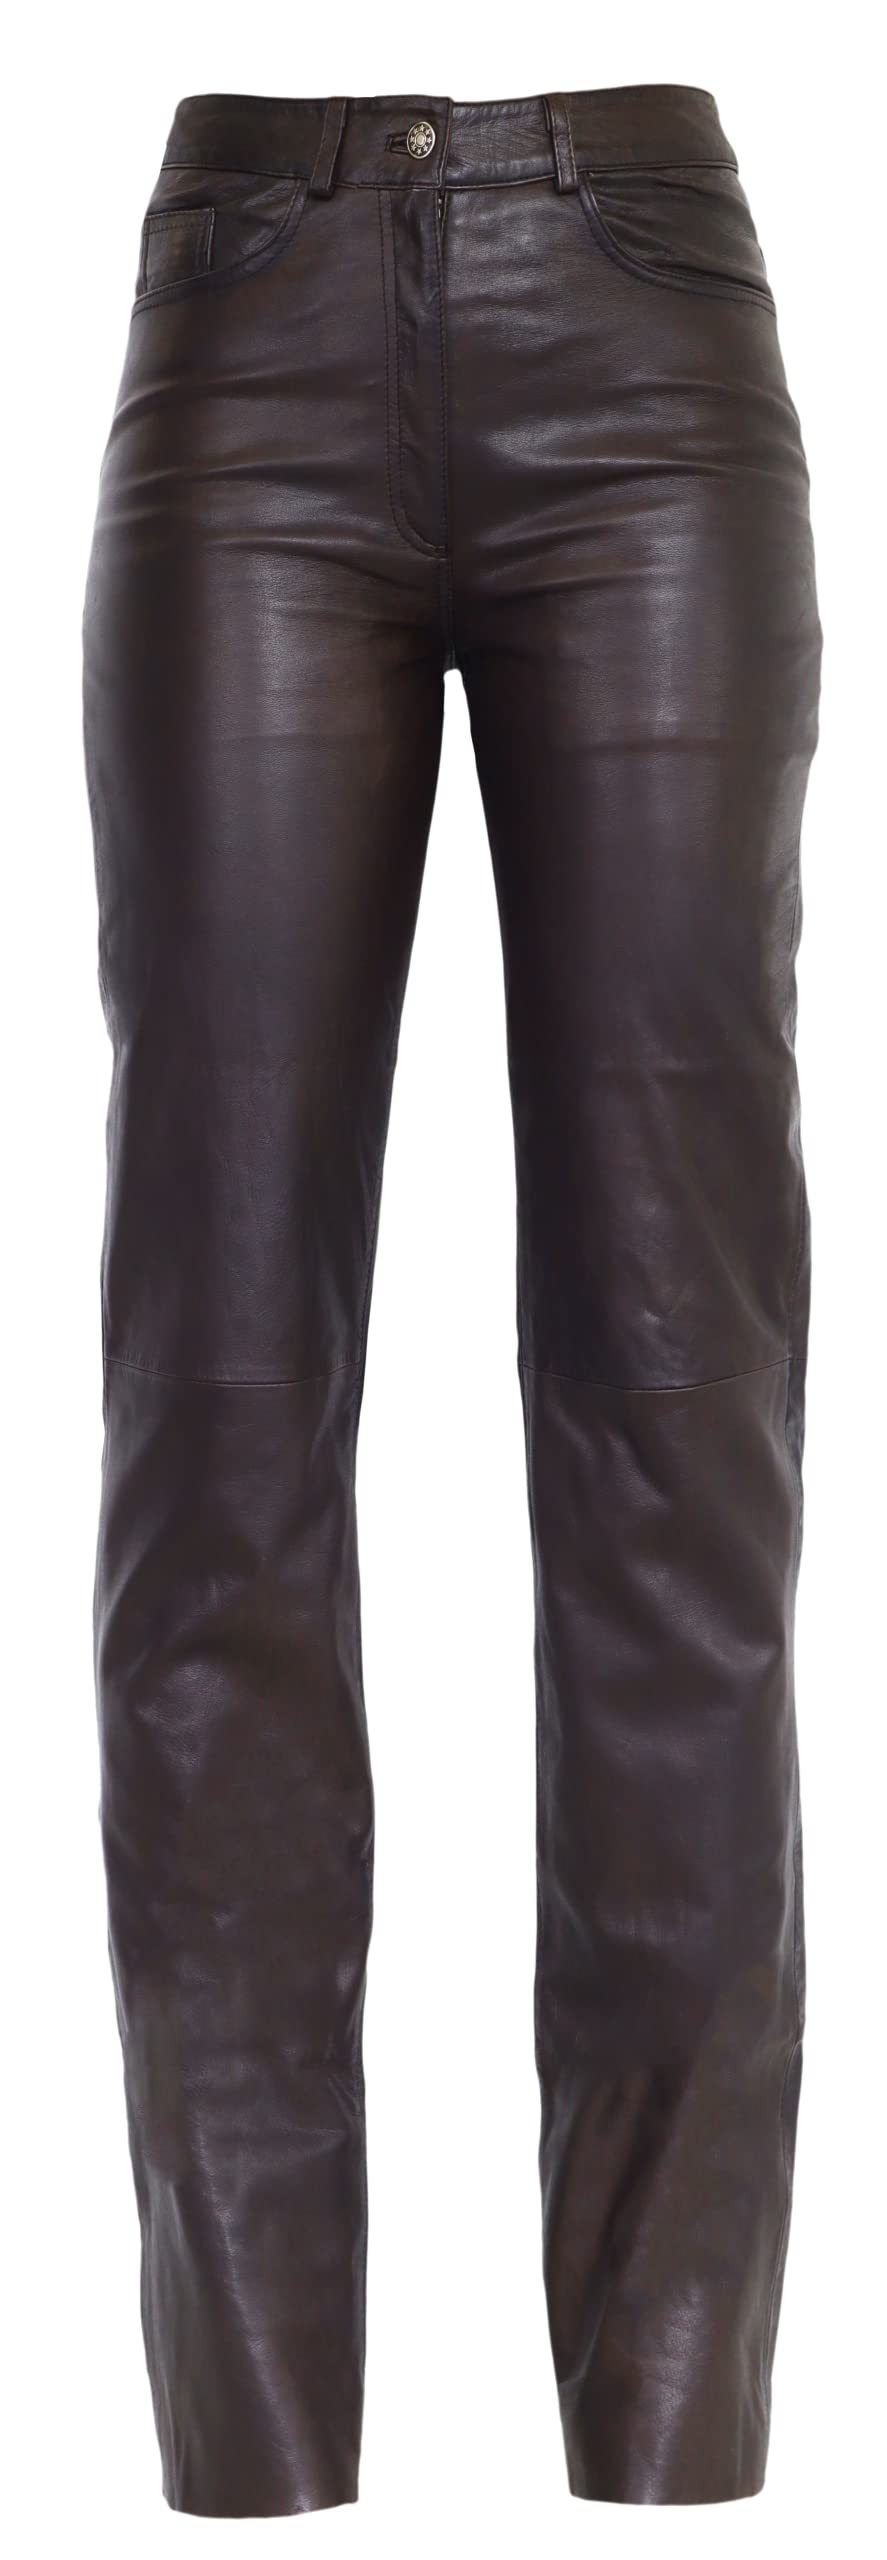 RICANO 9809, Damen Lederhose - 5-Pocket Stil - (Slim Fit/High Waist) echtes Lamm Leder (Braun, XL)